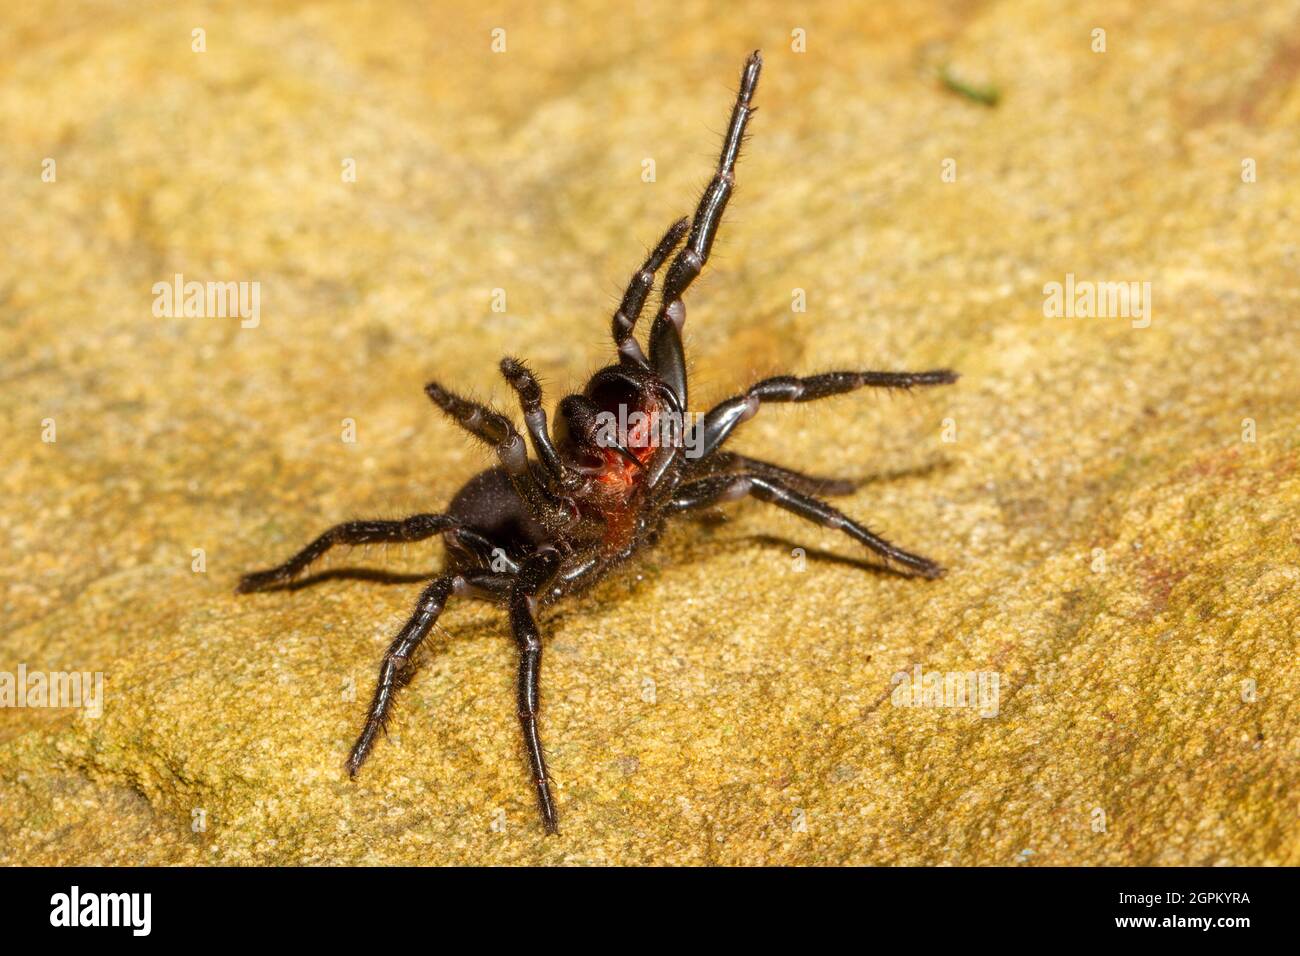 Australian Sydney Funnel Web Spider Stock Photo